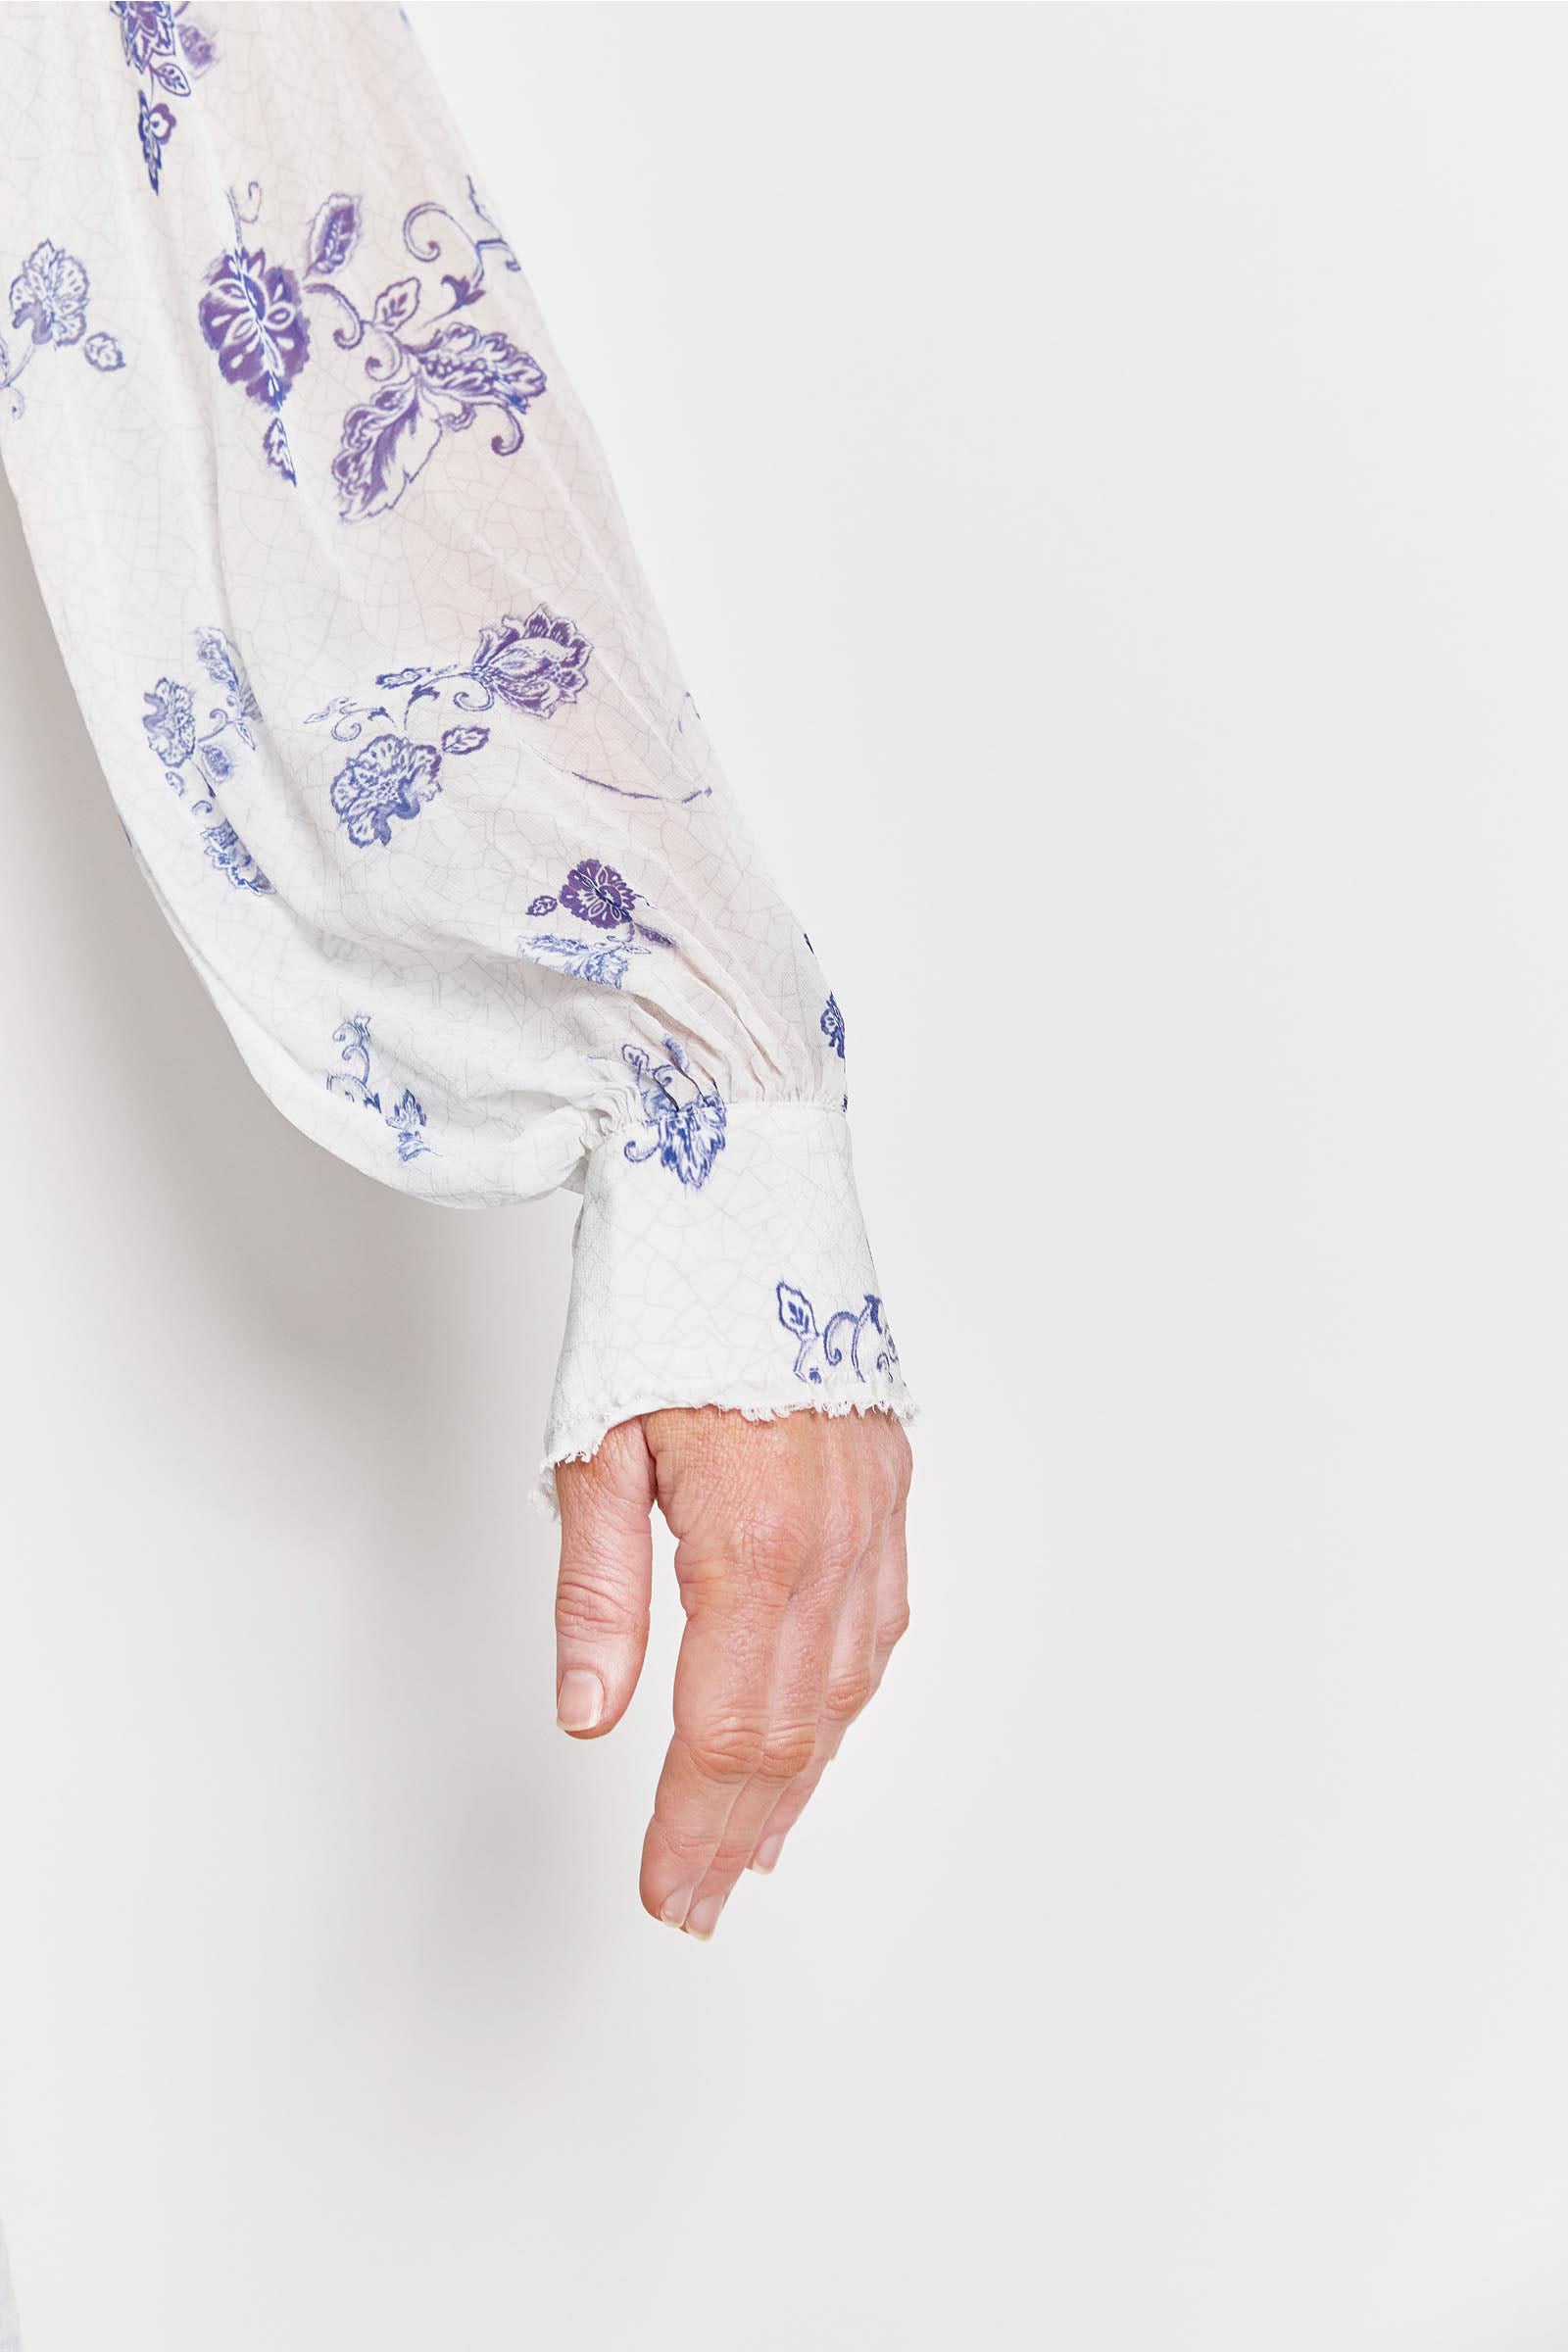 byfreer silk cin cin floral shirt.